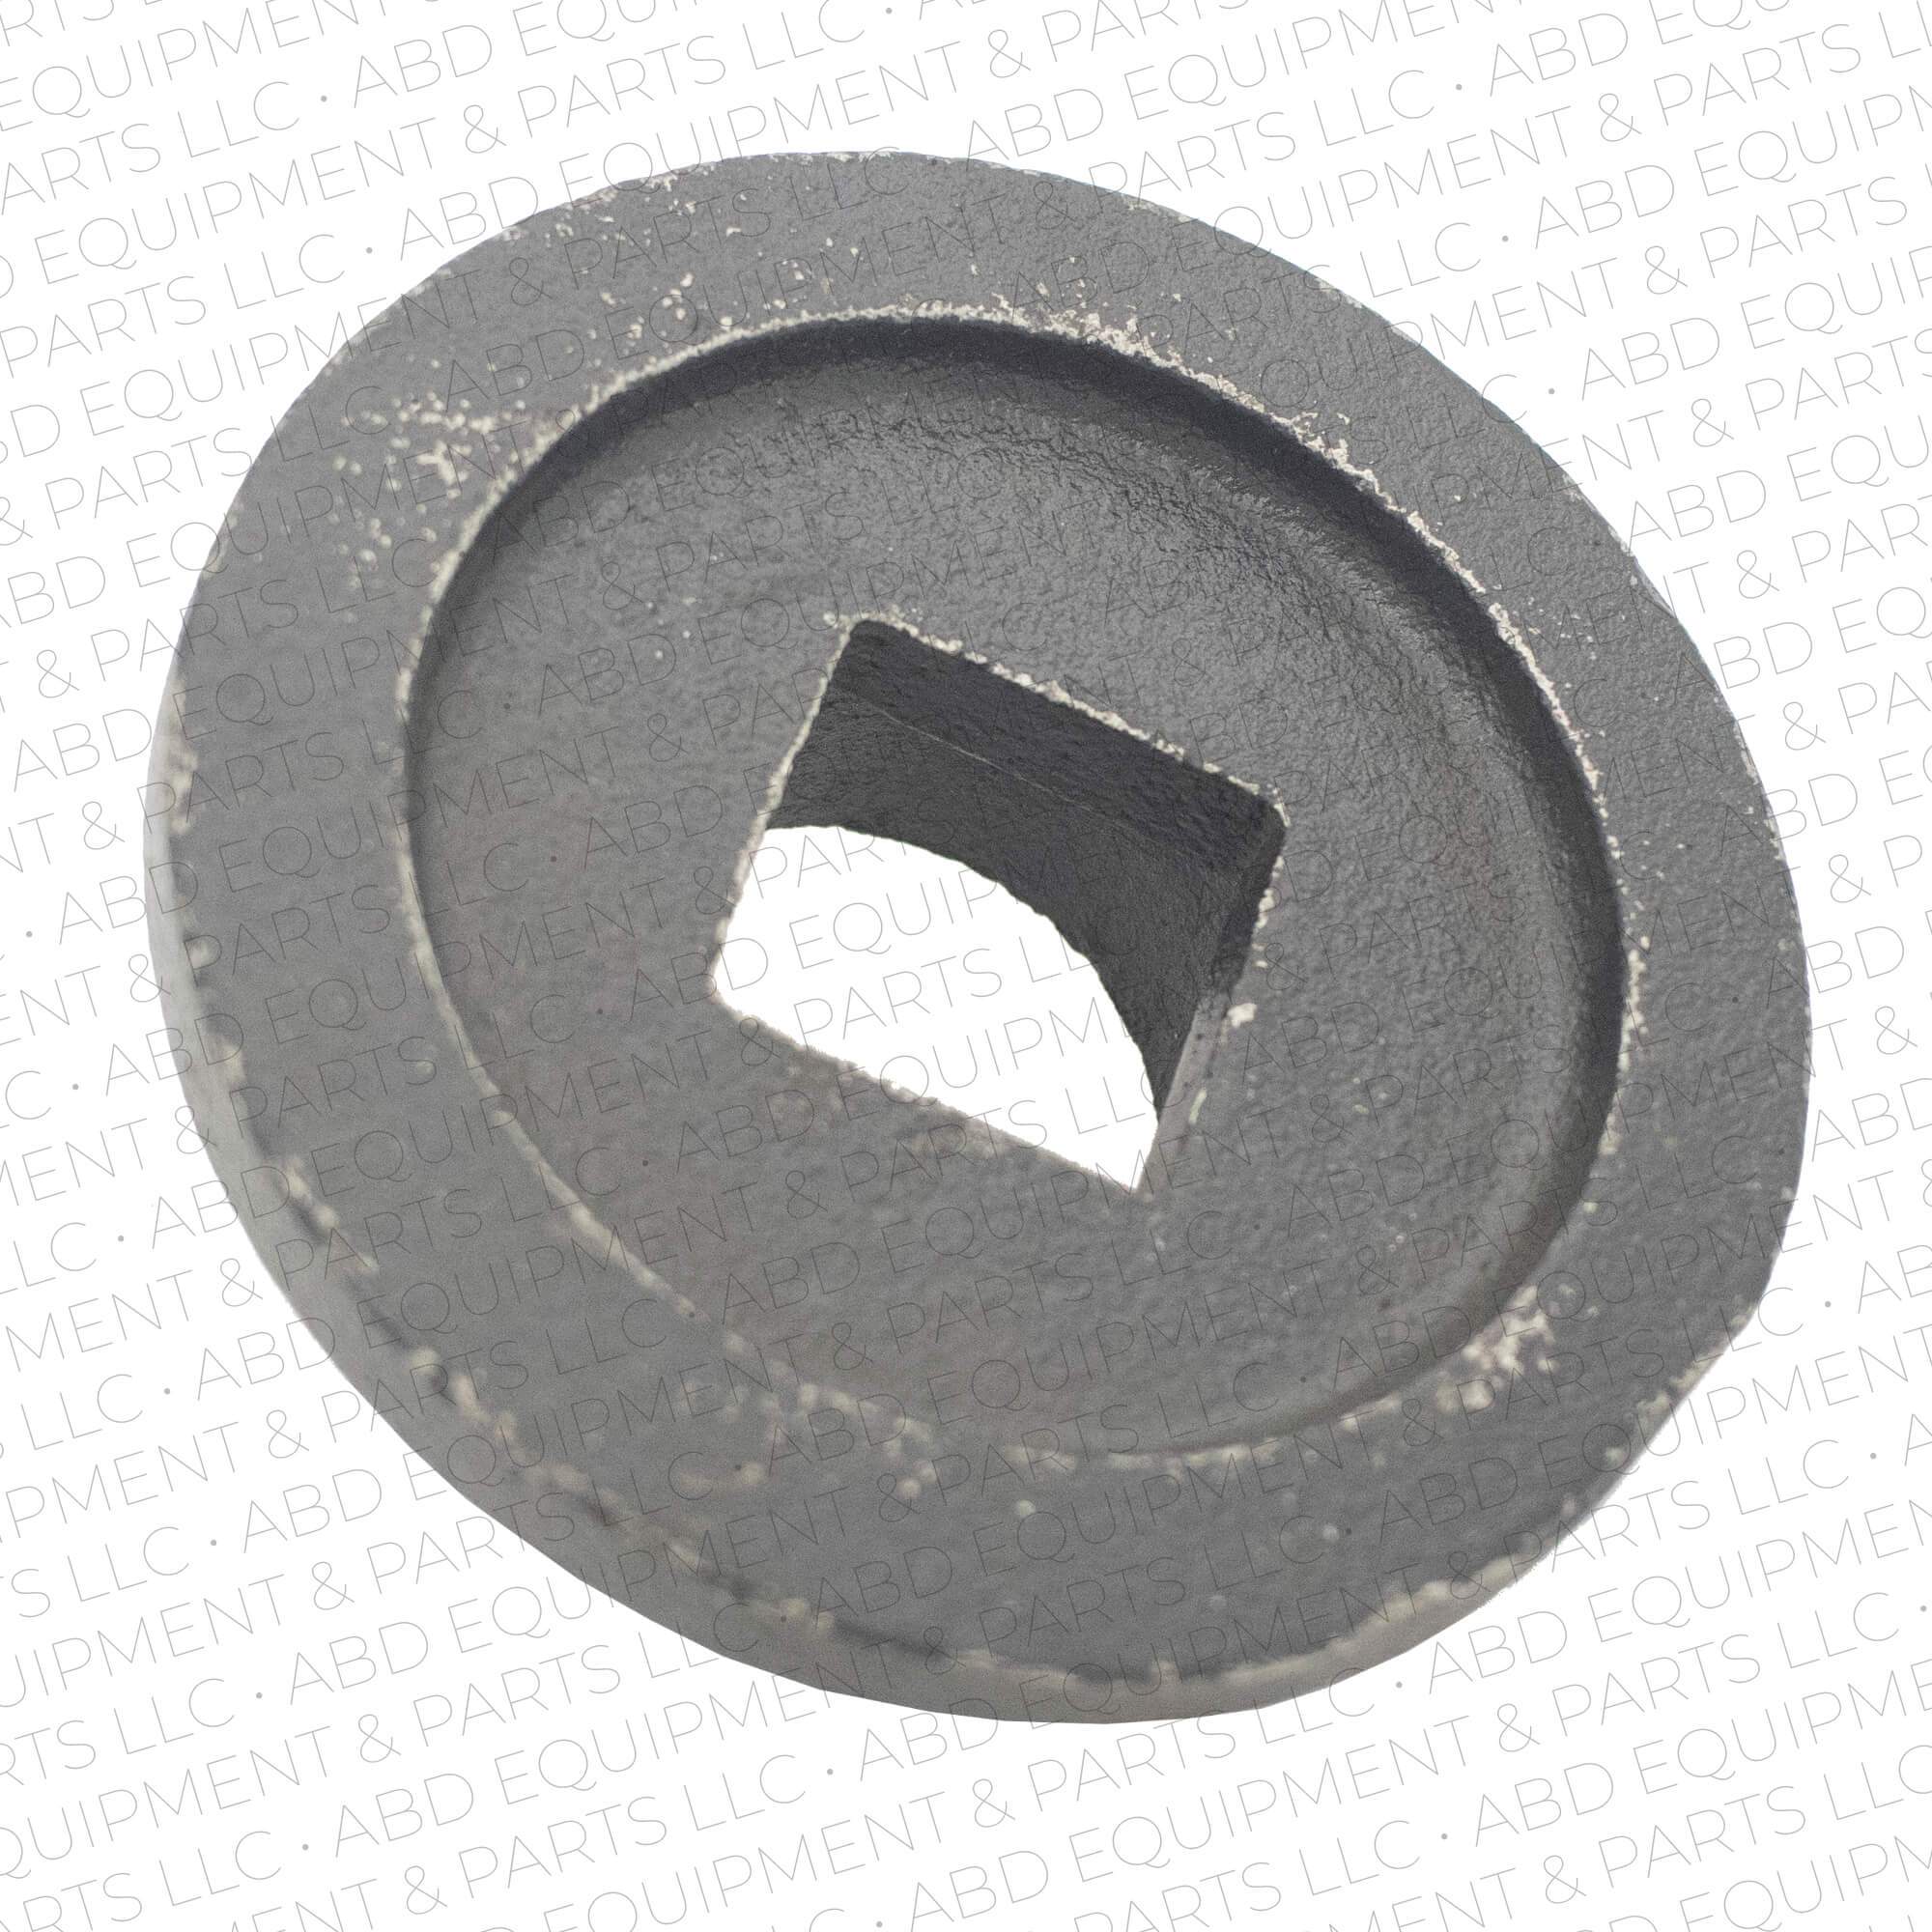 Disc Harrow Half Spool 1 1/8" Square Axle - Abd Equipment & Parts LLC